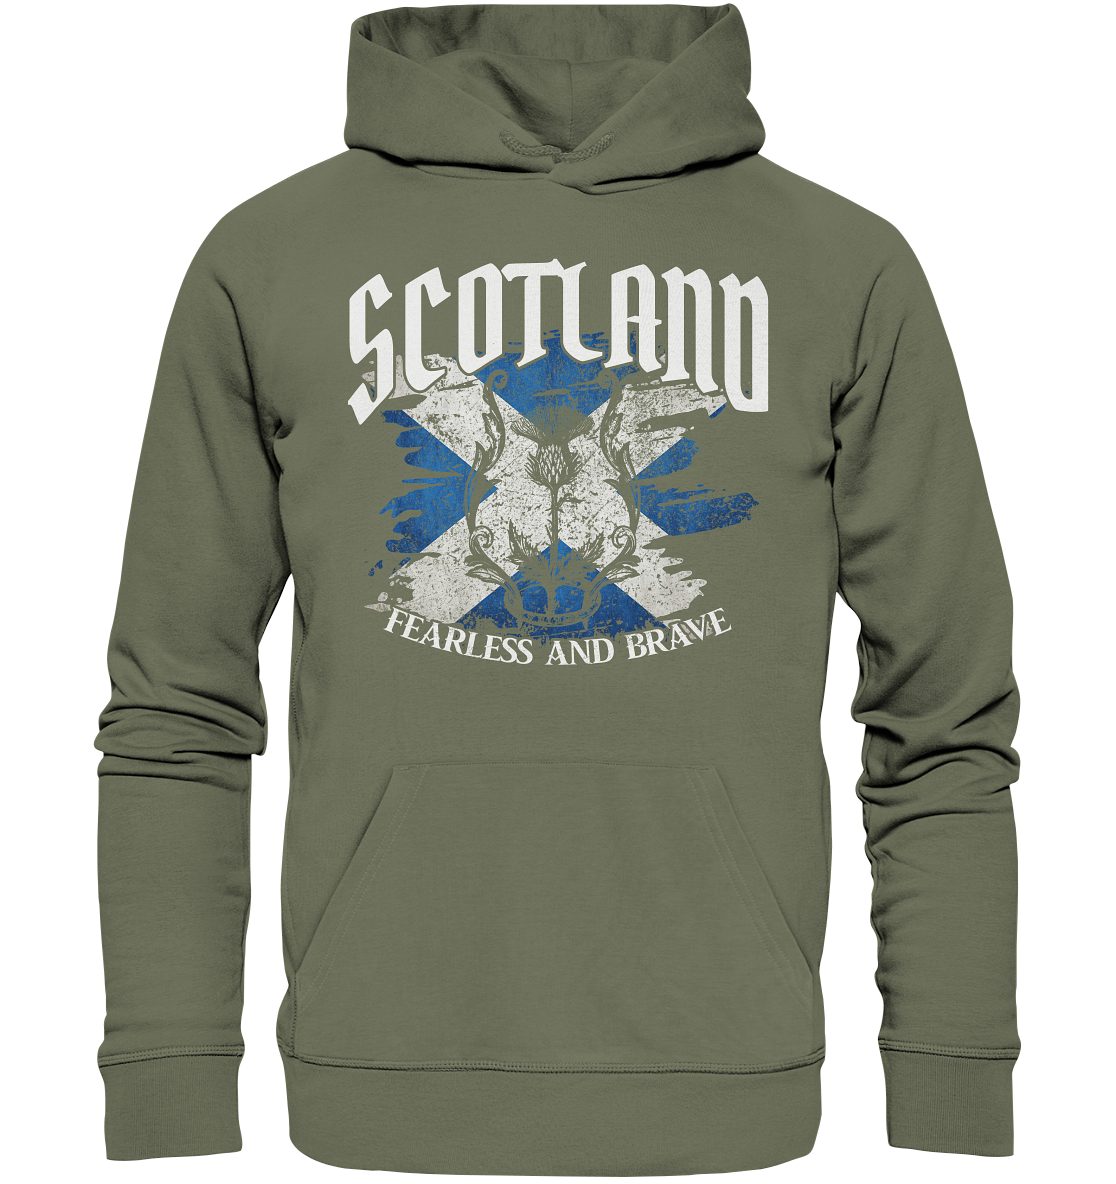 Scotland "Fearless and Brave / Splatter" - Premium Unisex Hoodie